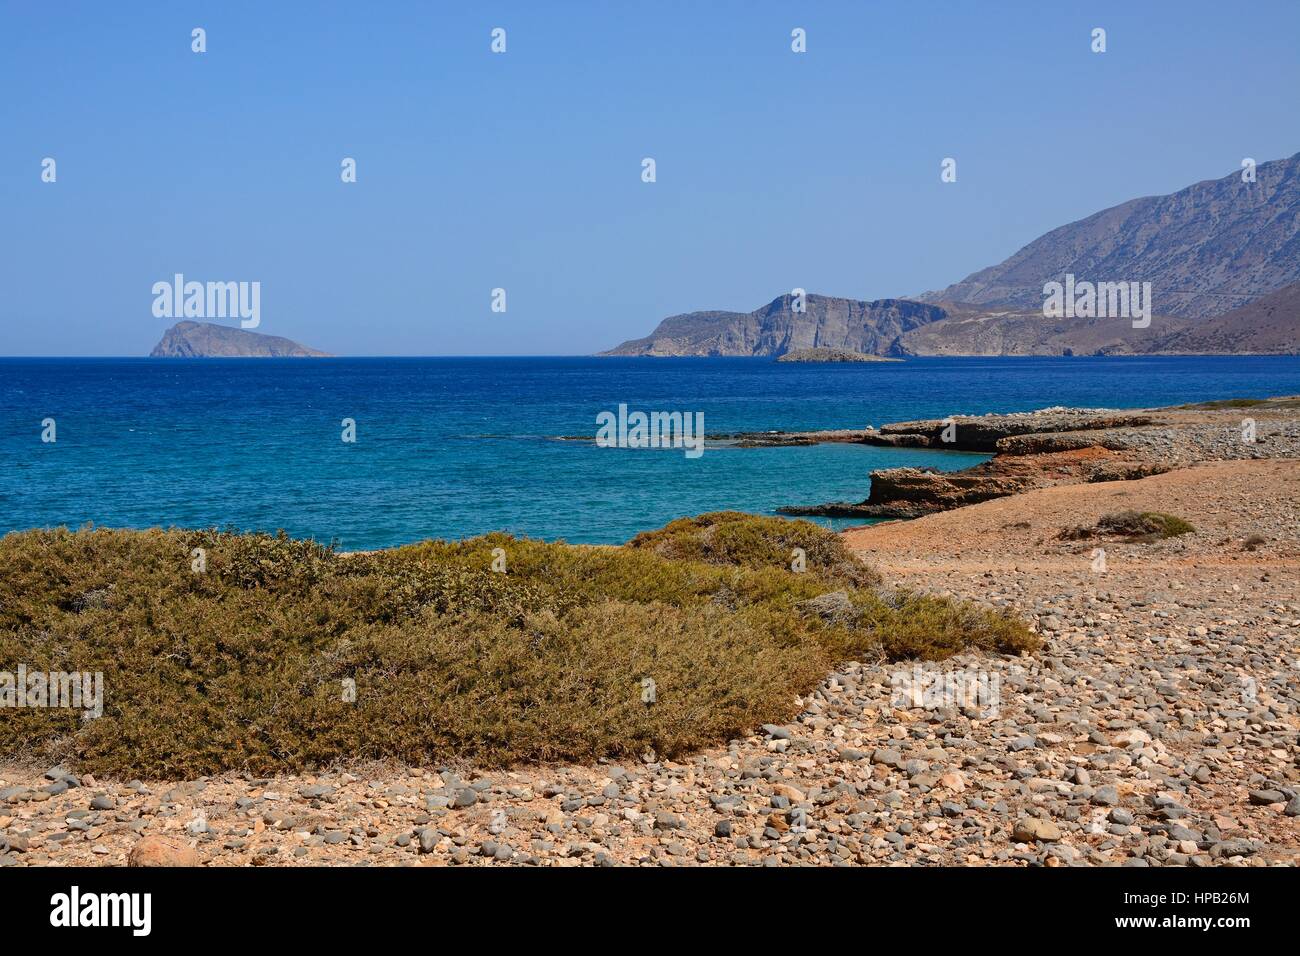 View of the sea and rugged coastline near Ammoudara, Crete, Greece, Europe. Stock Photo